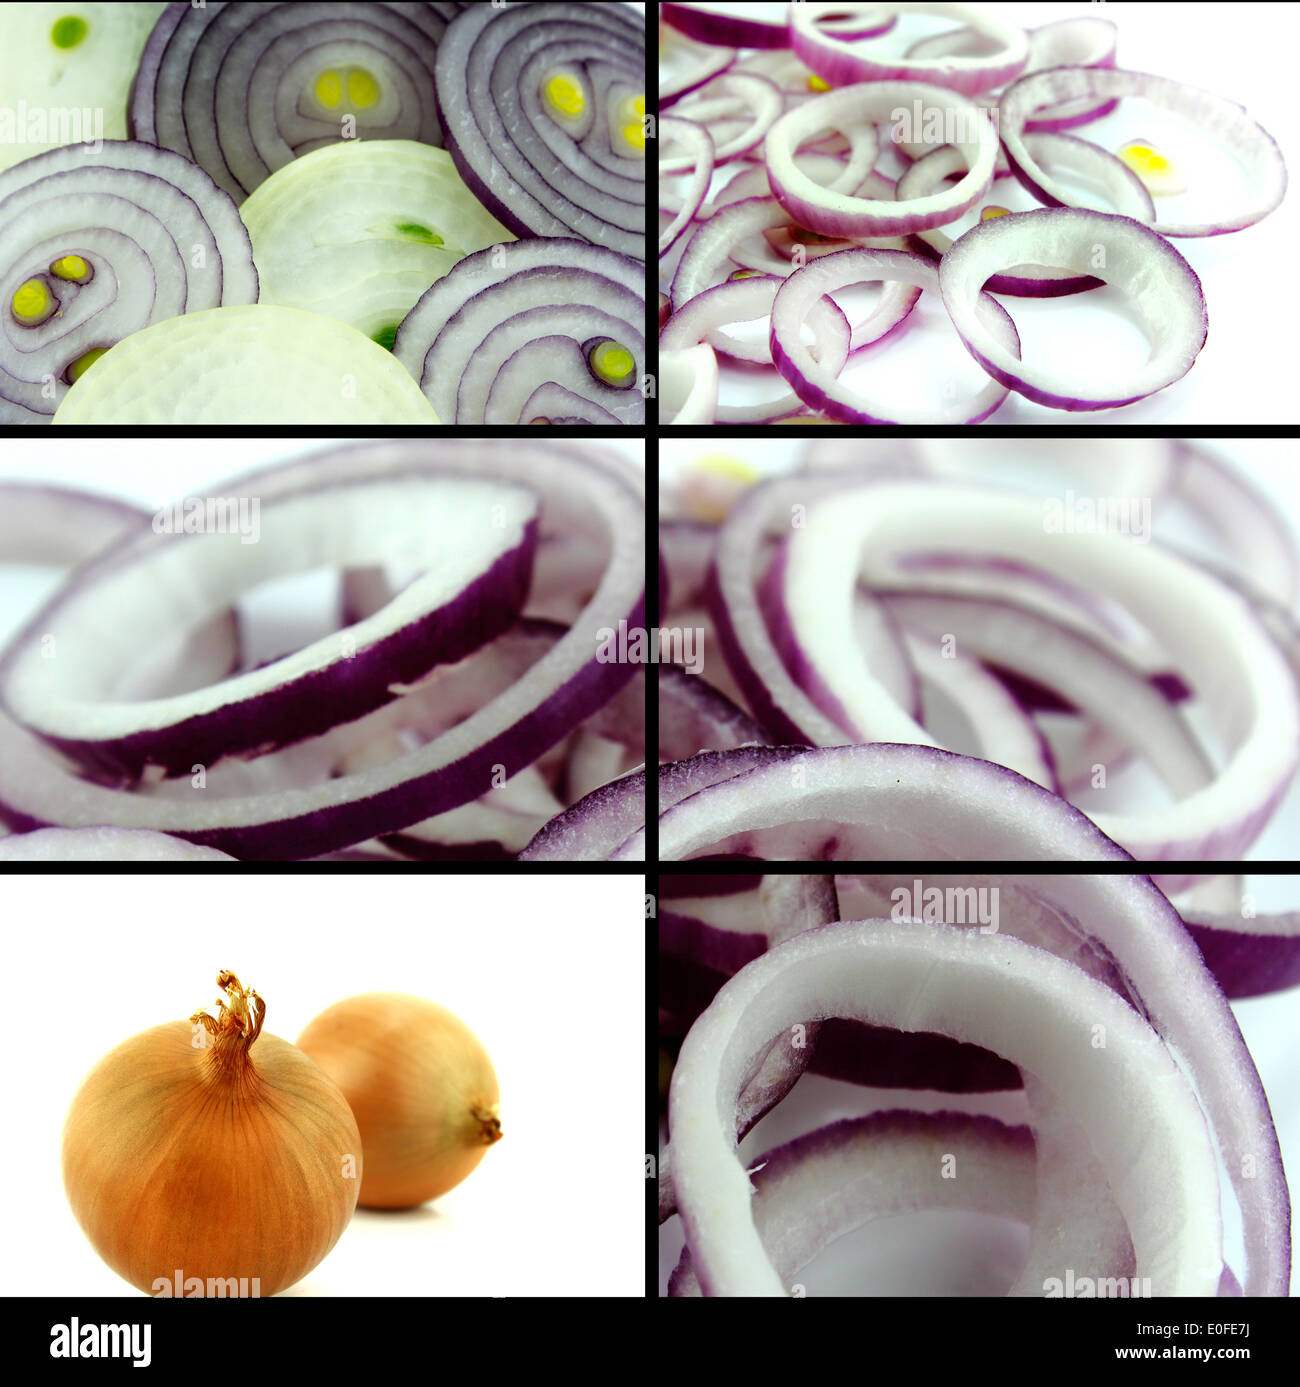 https://c8.alamy.com/comp/E0FE7J/healthy-and-organic-food-set-of-fresh-sliced-onion-E0FE7J.jpg